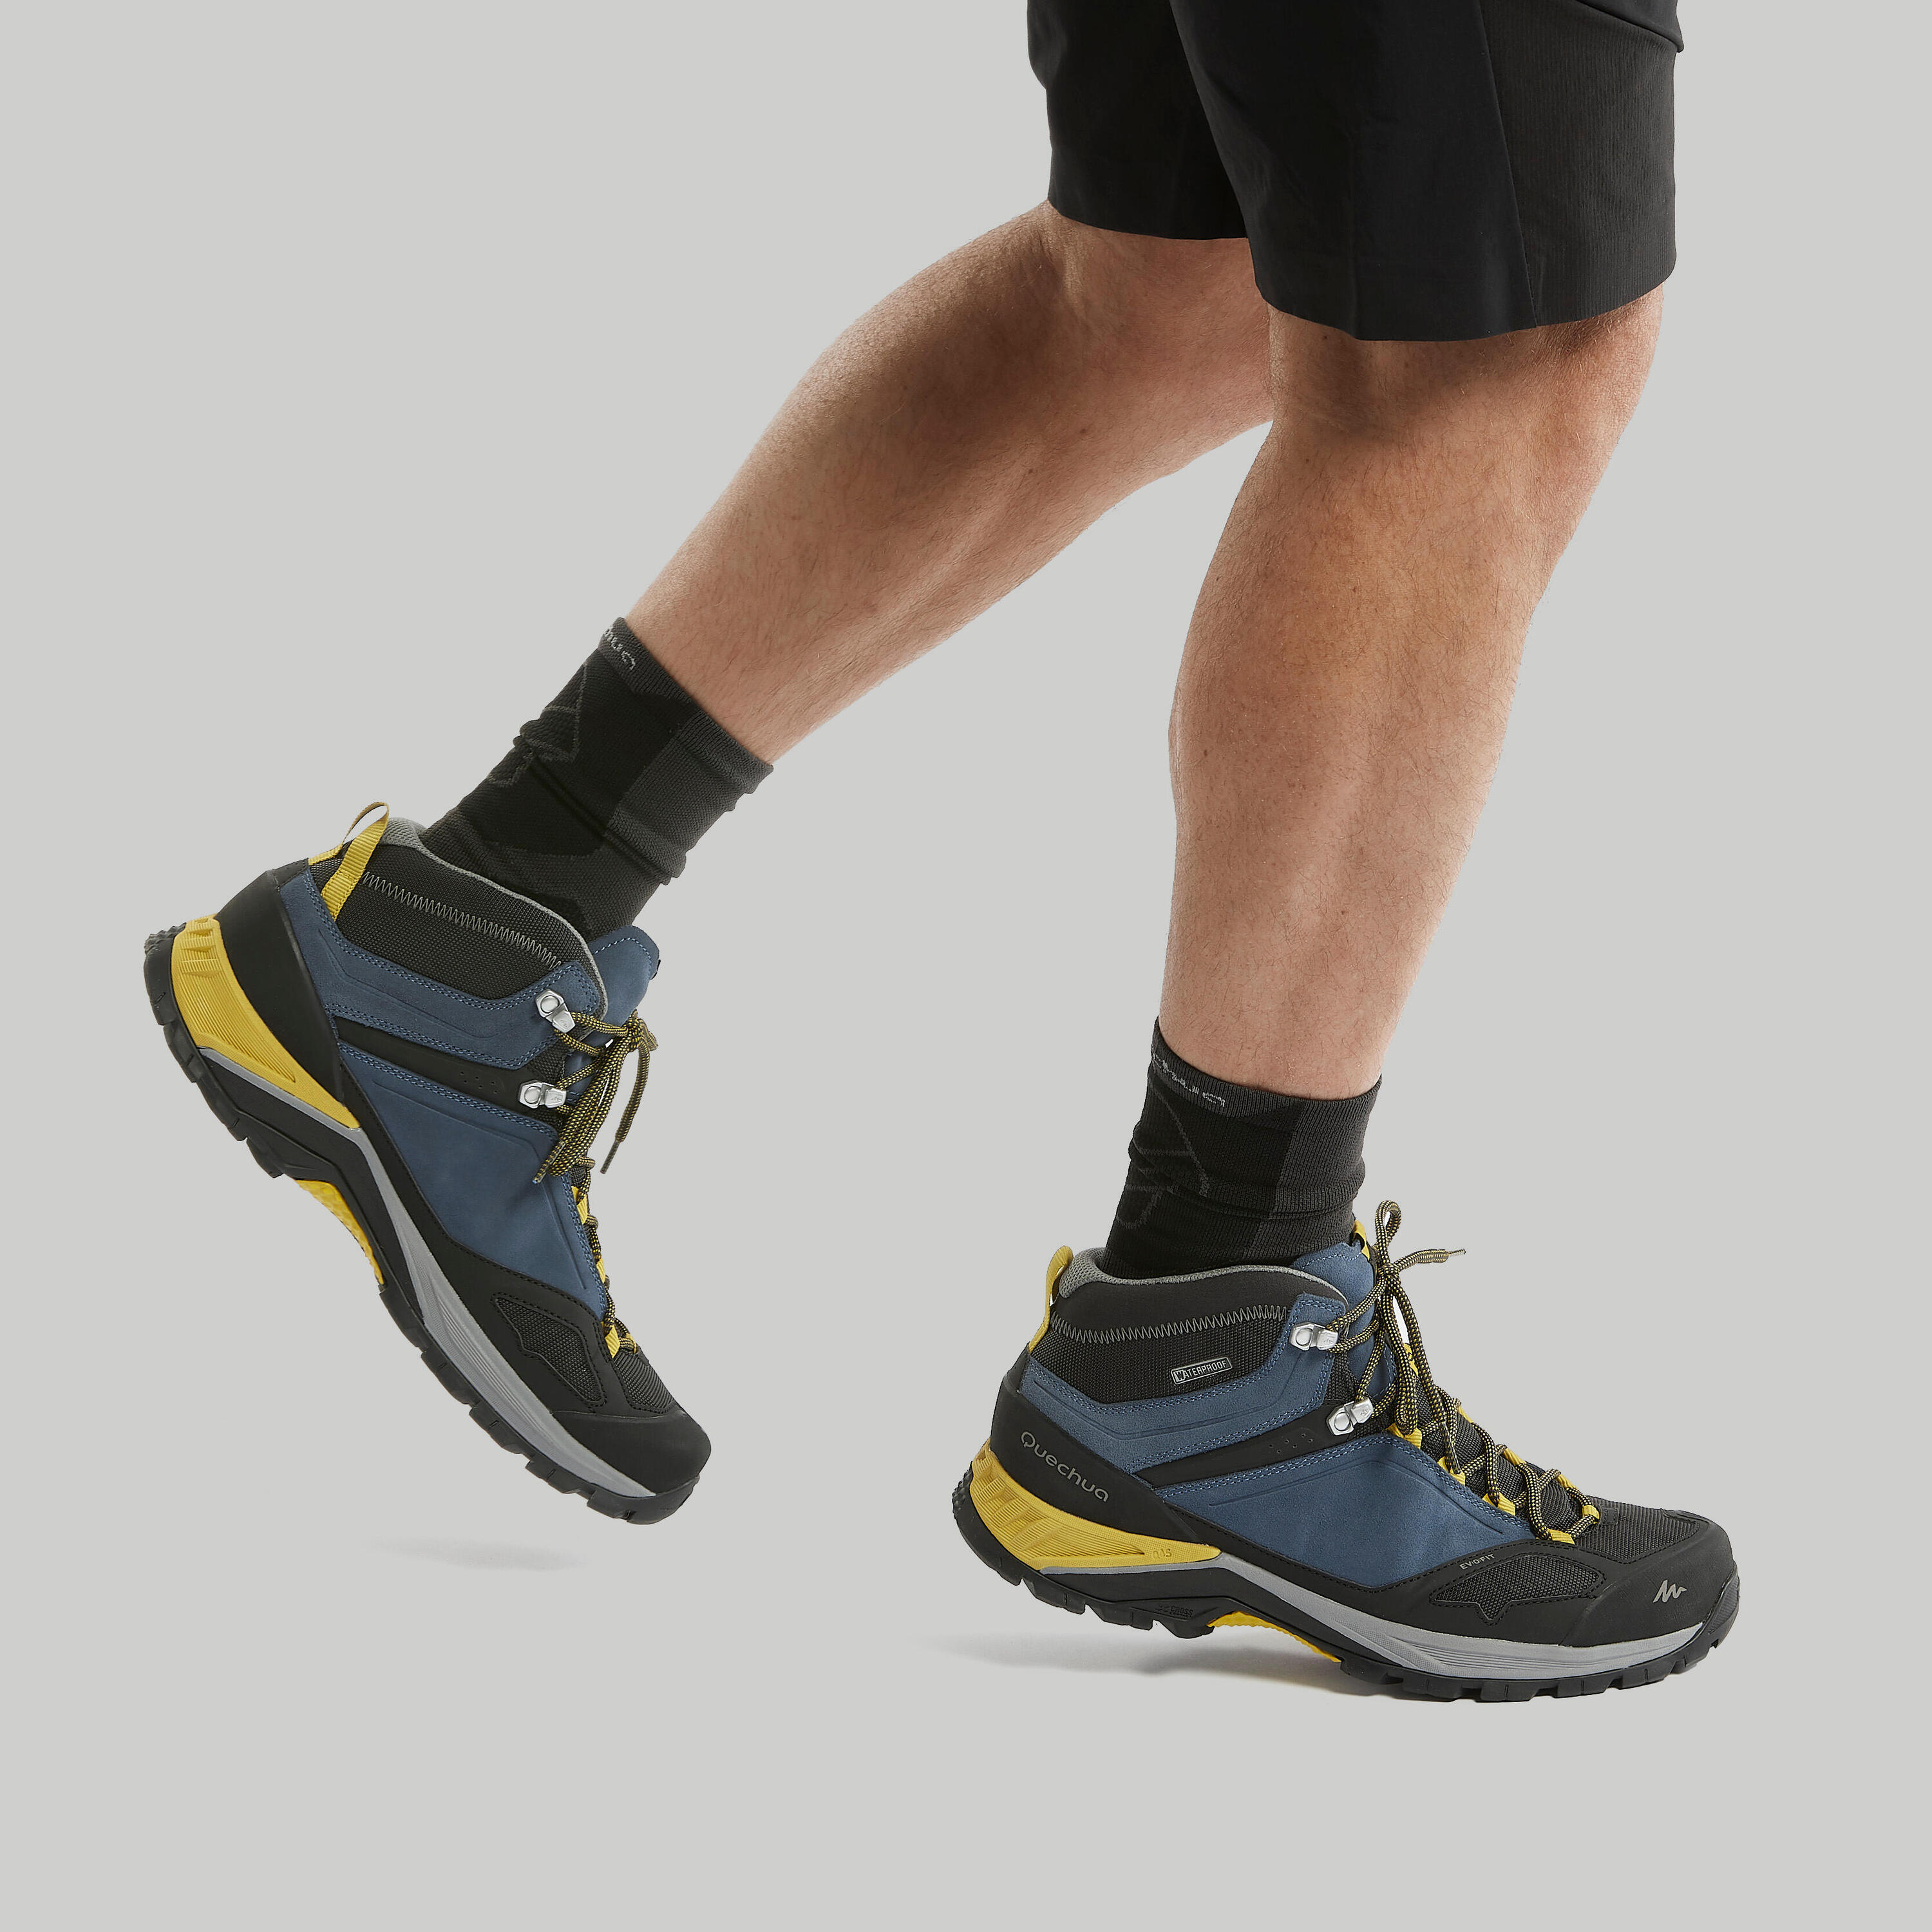 Men's waterproof mountain walking shoes - MH500 Mid - Blue/Yellow 4/4